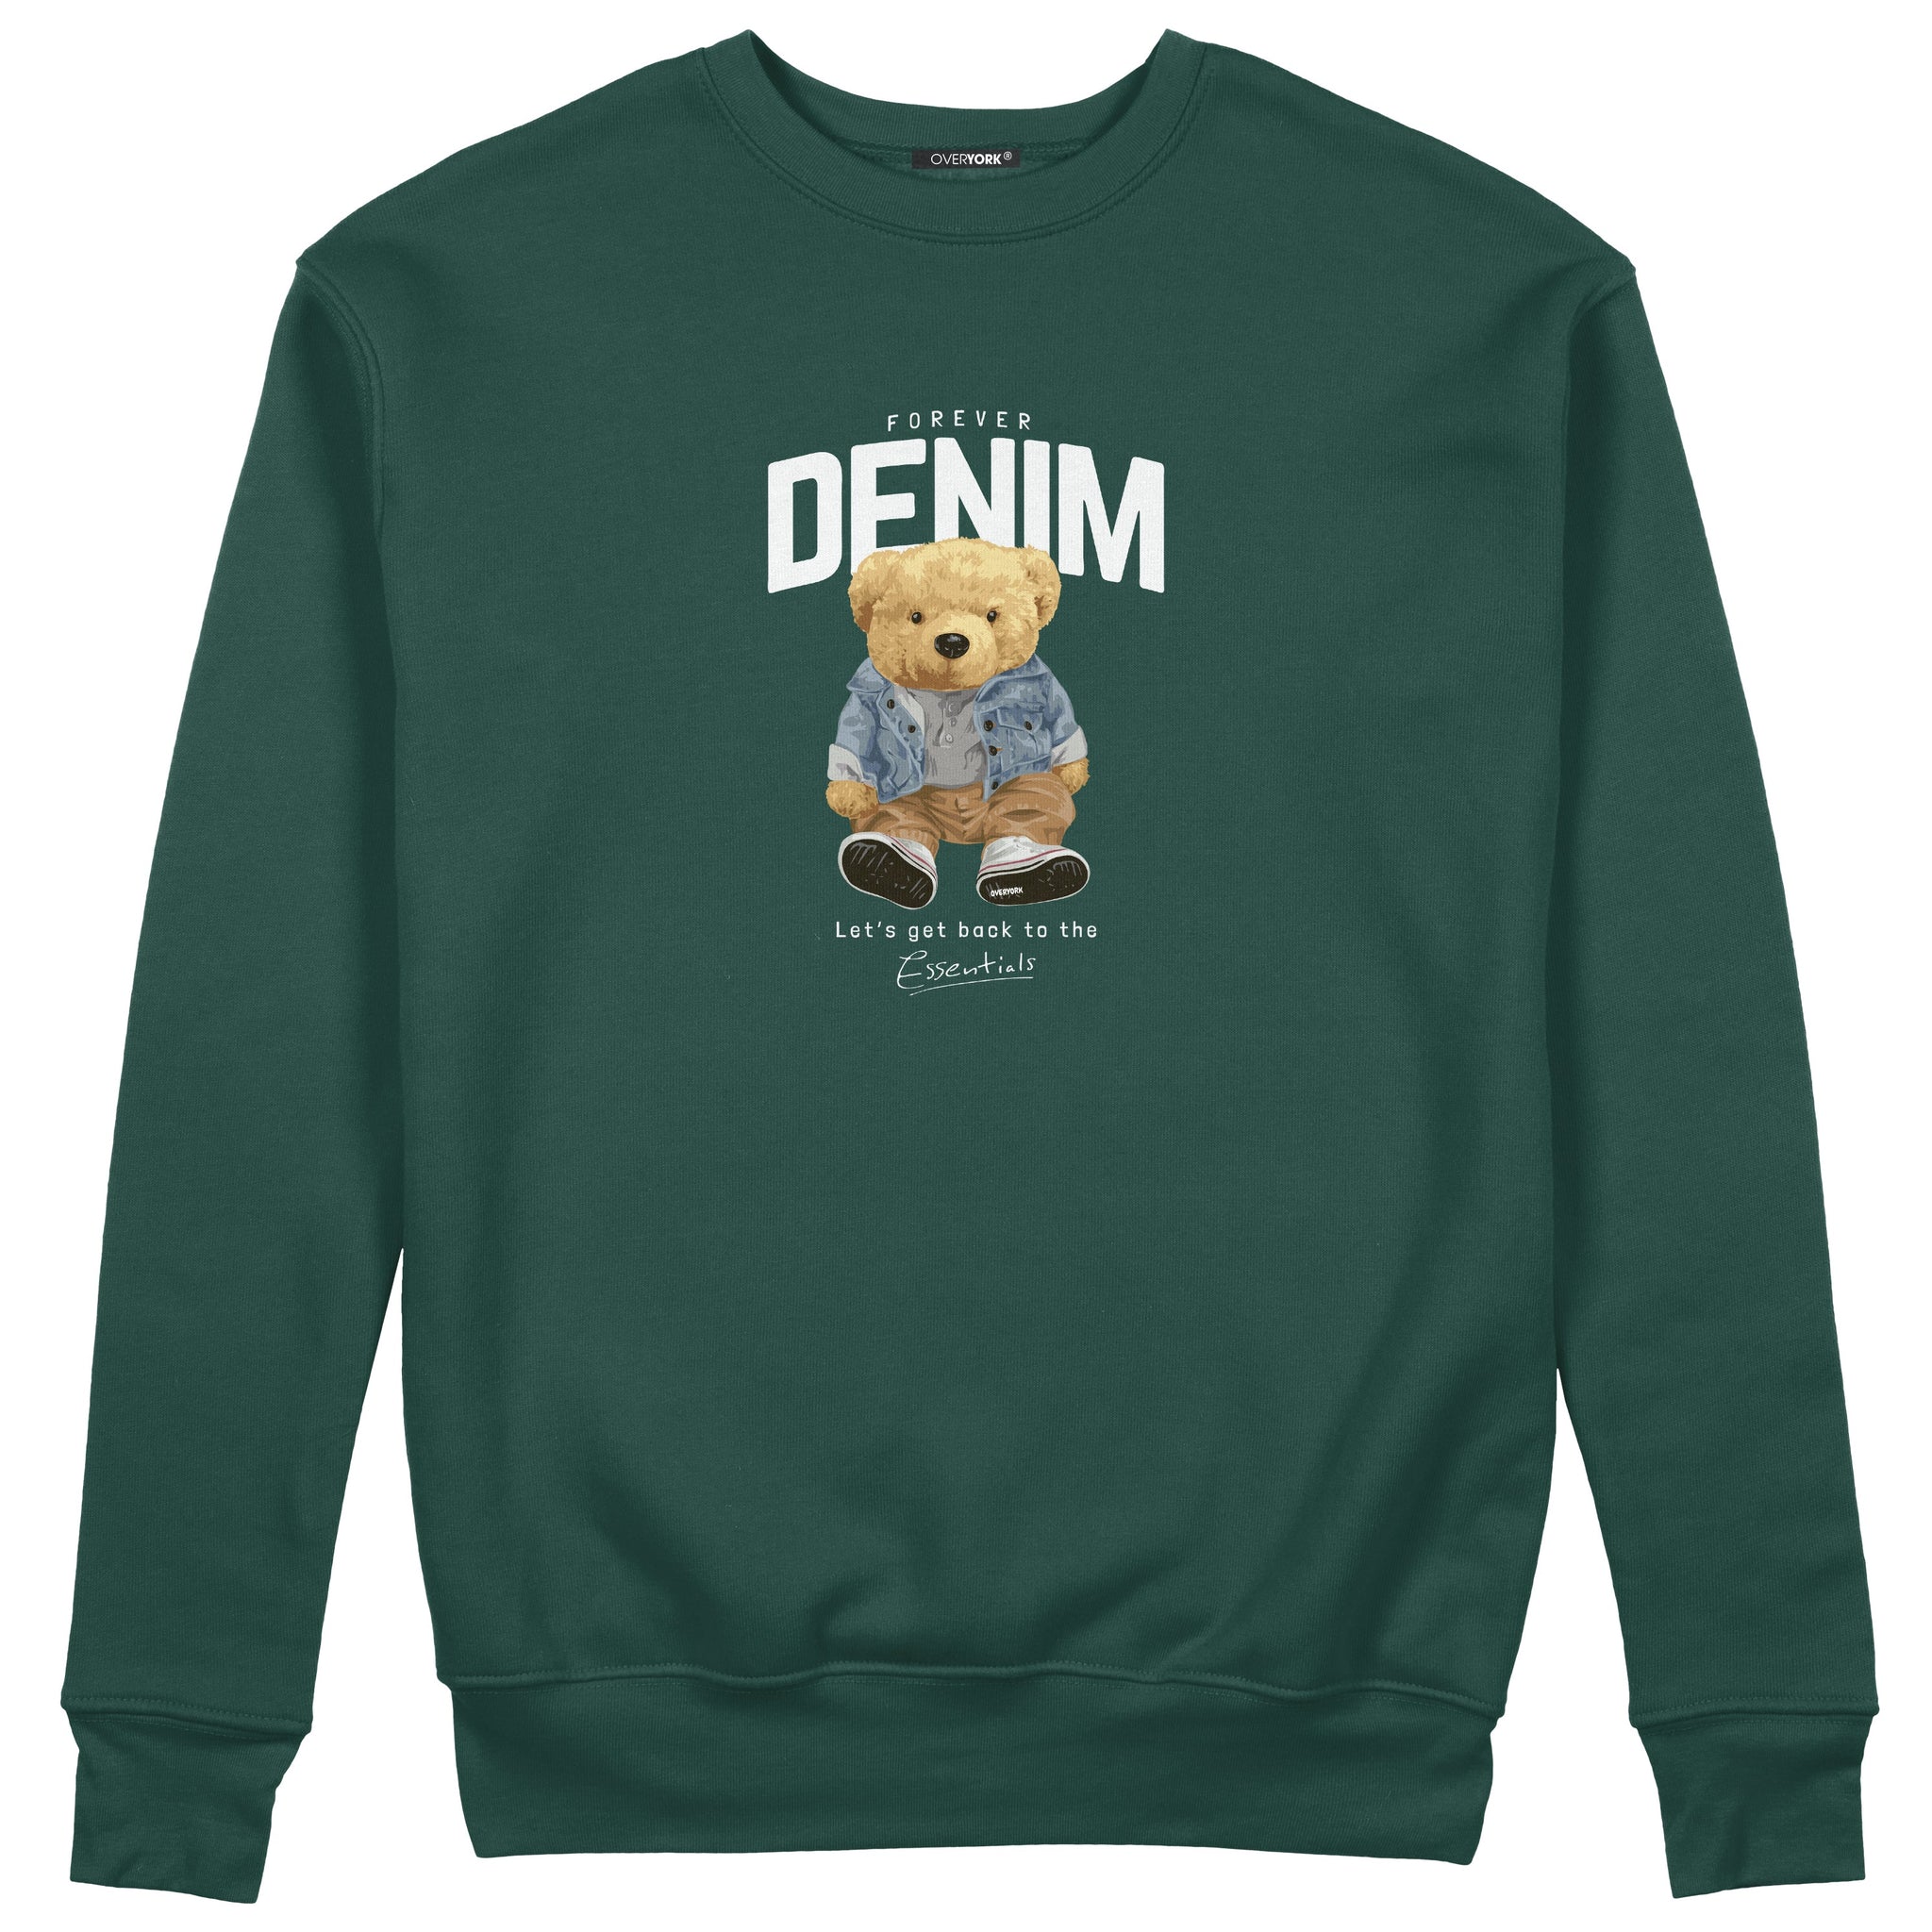 Denim - Sweatshirt OUTLET